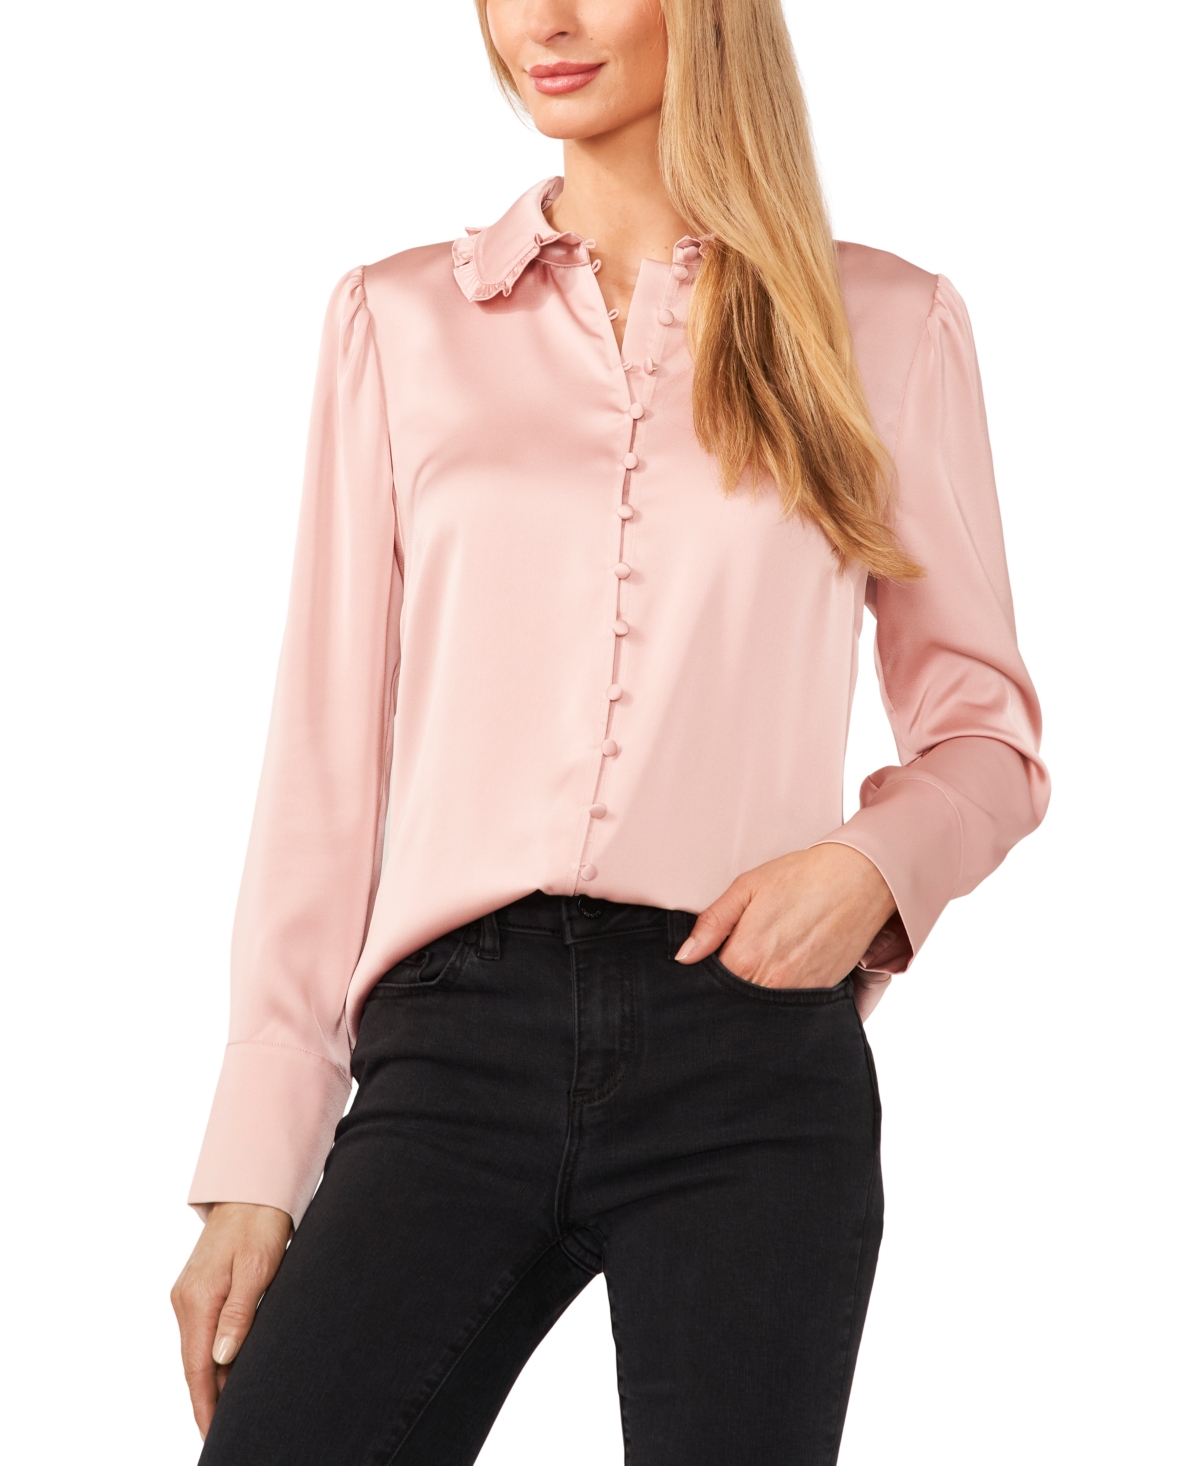 Vintage Blouses, Tops & Retro Shirts CeCe Womens Ruffle-Collar Button-Front Blouse - Misty Pink $50.56 AT vintagedancer.com